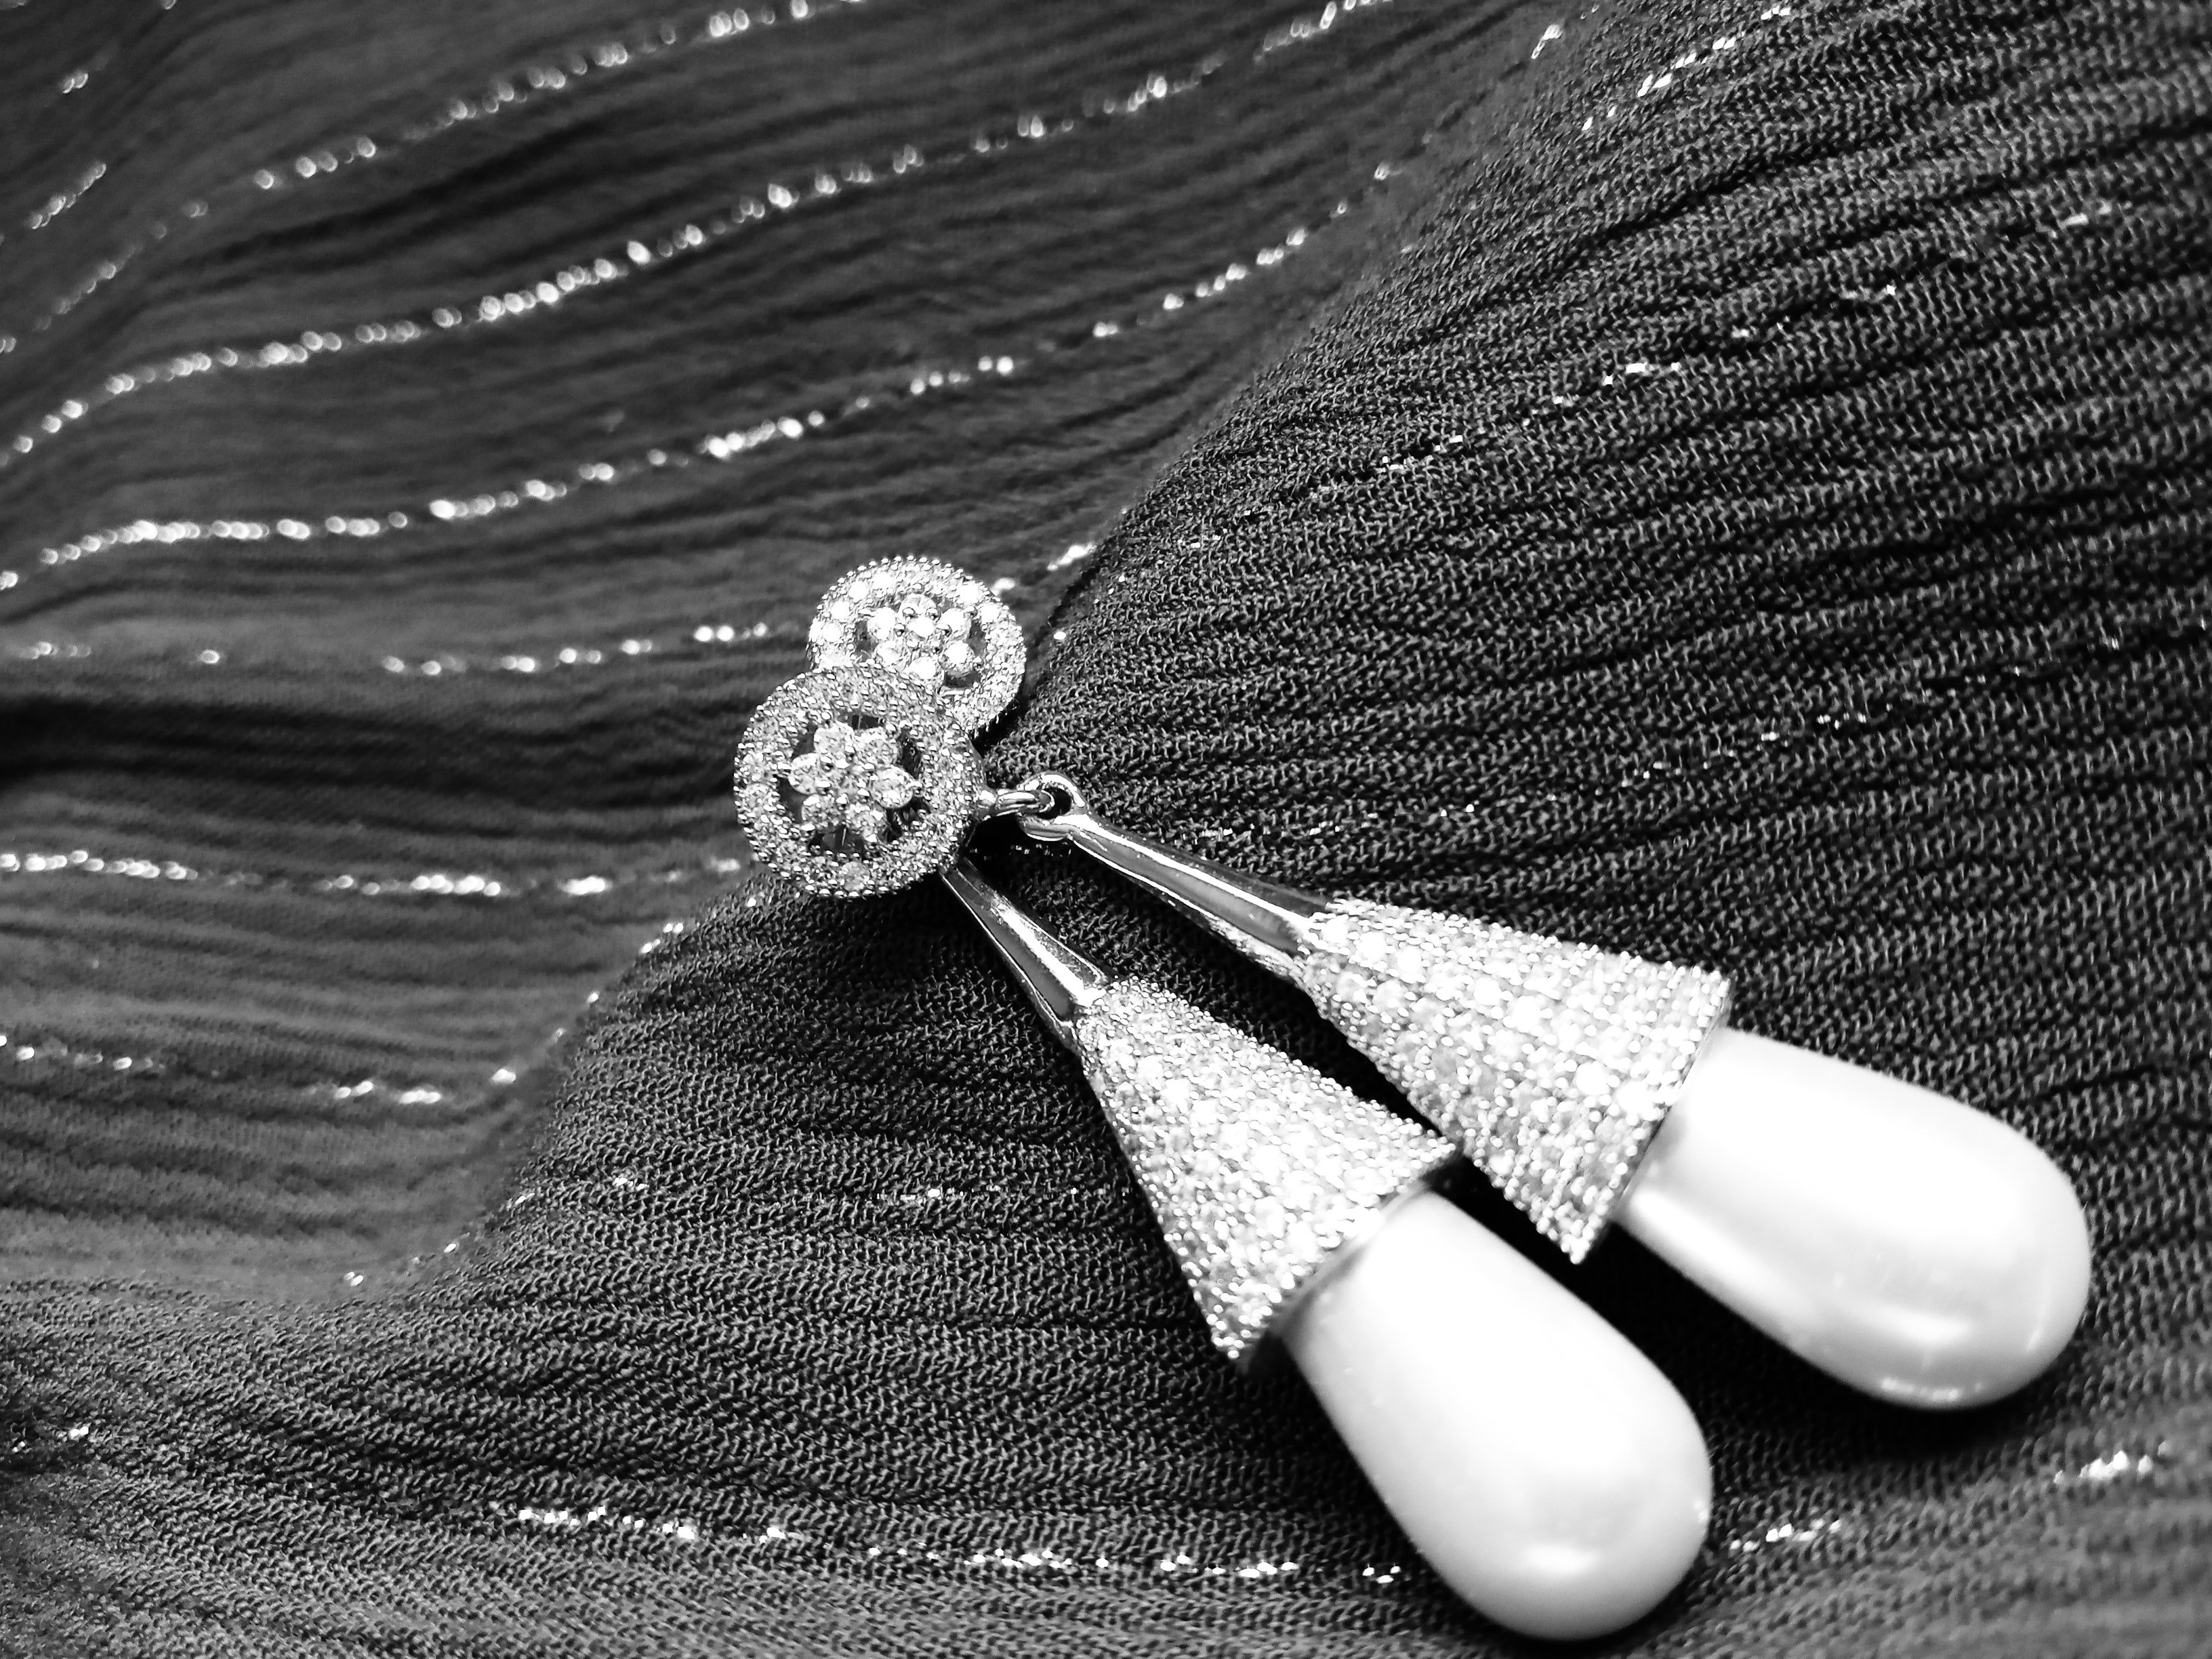 Lorraine and Harry found diamond earrings inside the sofa. | Source: Pexels